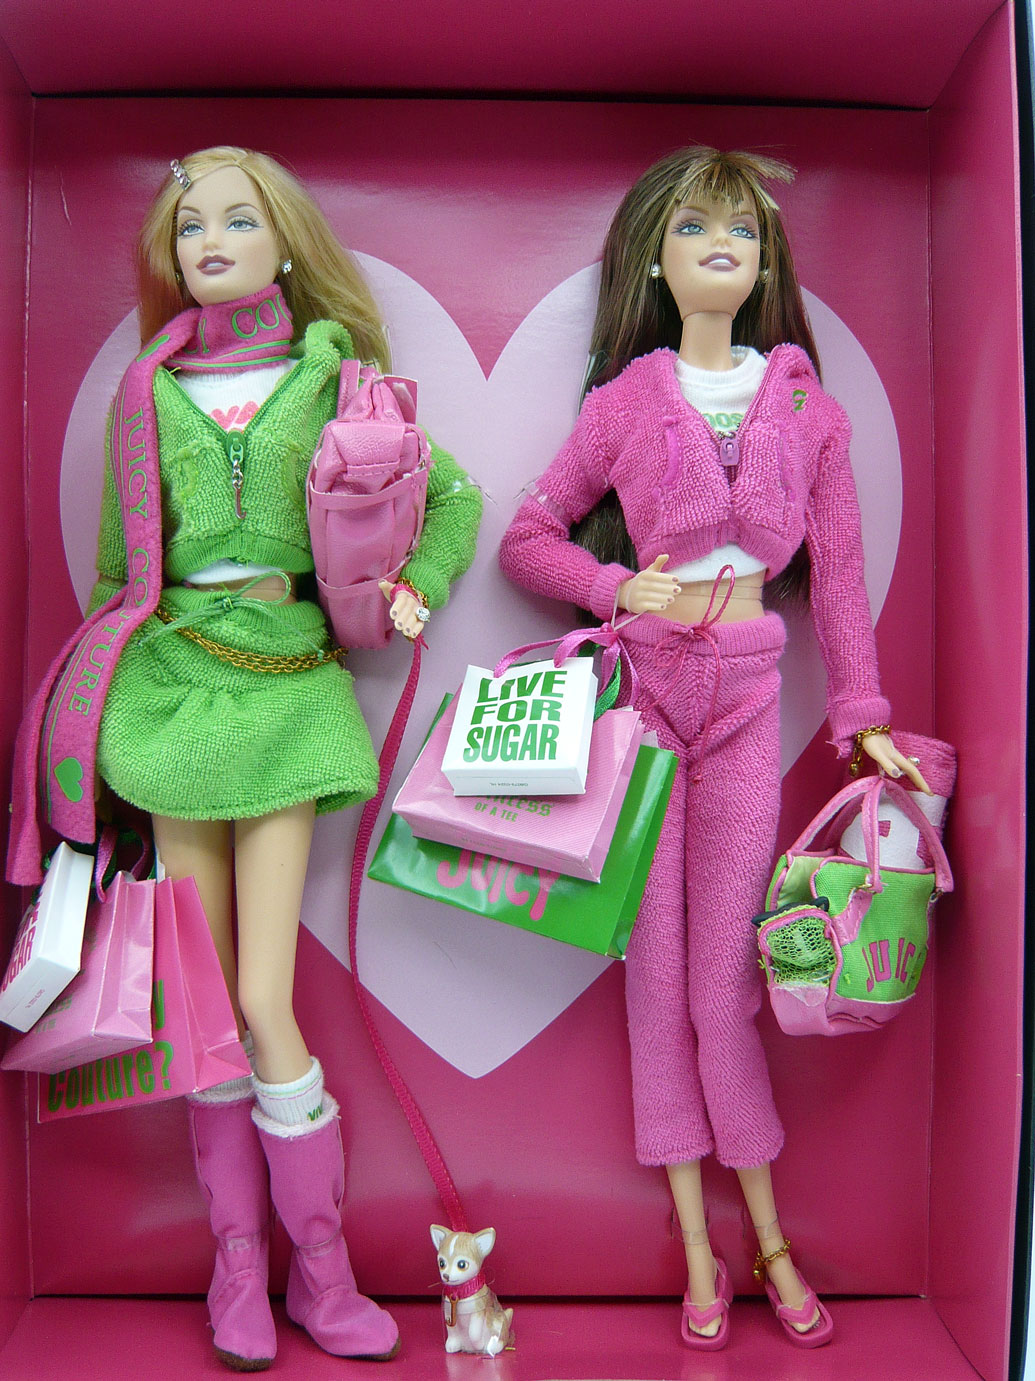 Blitz Humorvoll Maut barbie juicy couture Tor Kinderlieder aushändigen